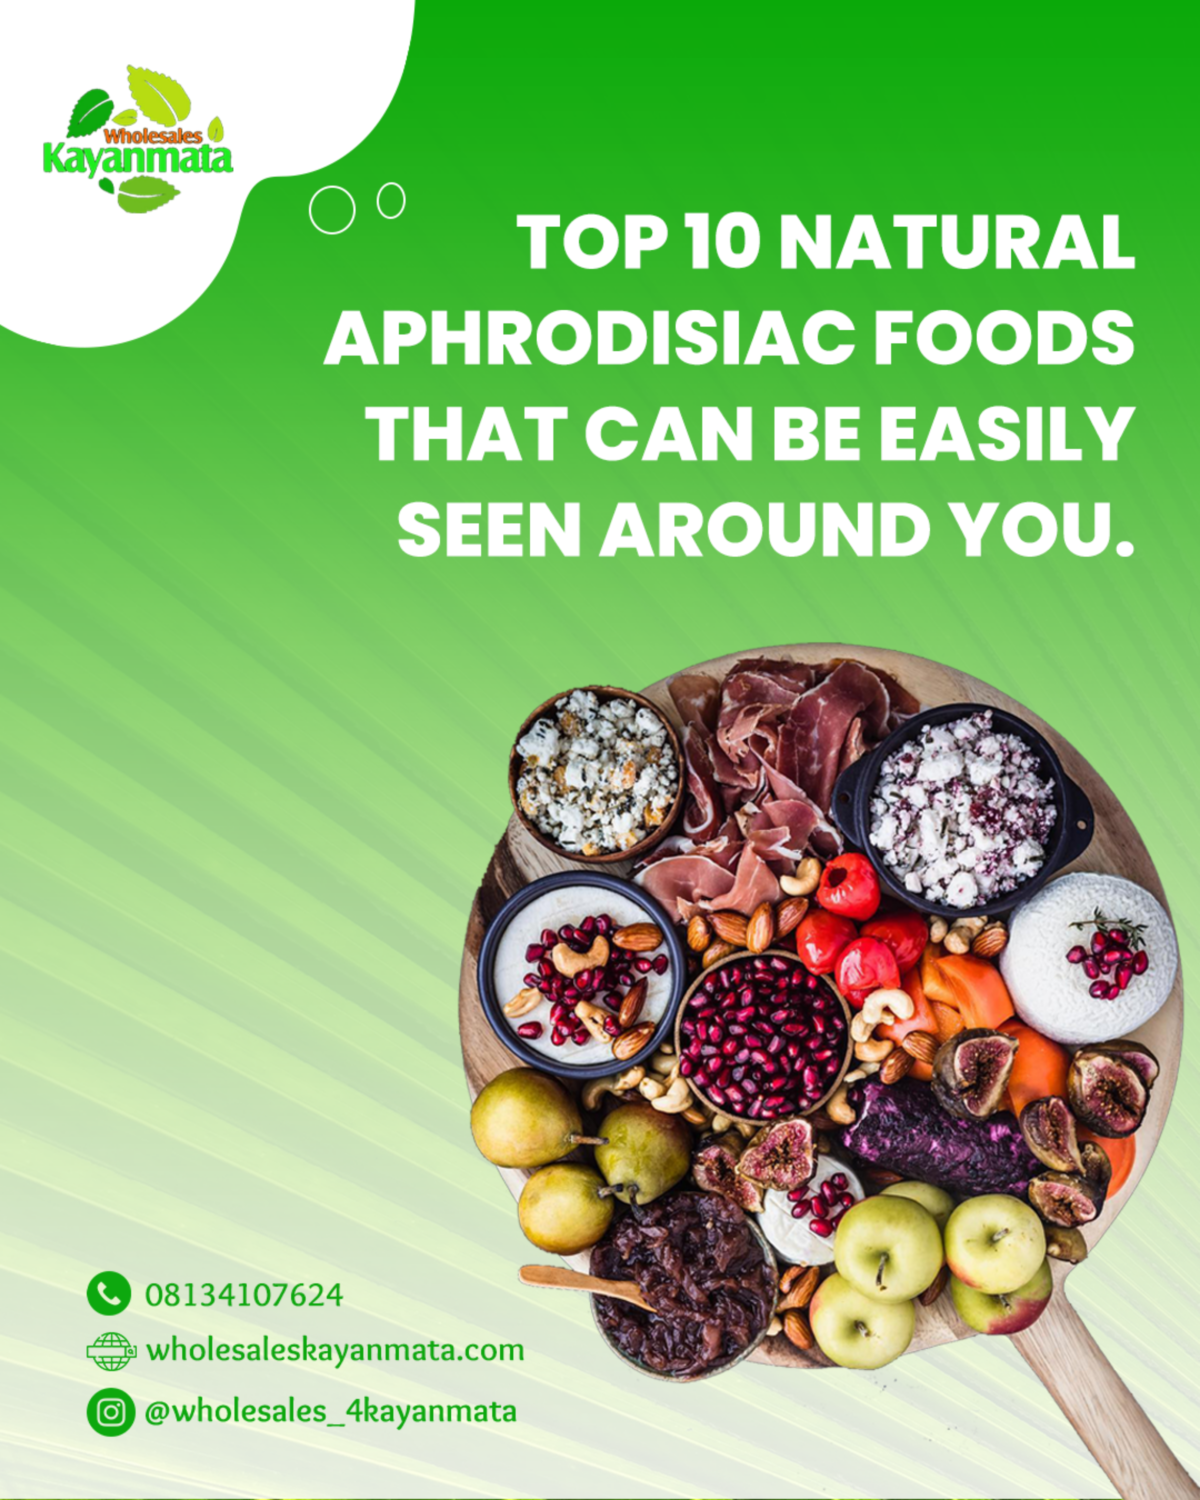 TOP NATURAL APHRODISIAC FOODS THAT CAN BE EASILY SEEN AROUND YOU Wholesale Kayanmata